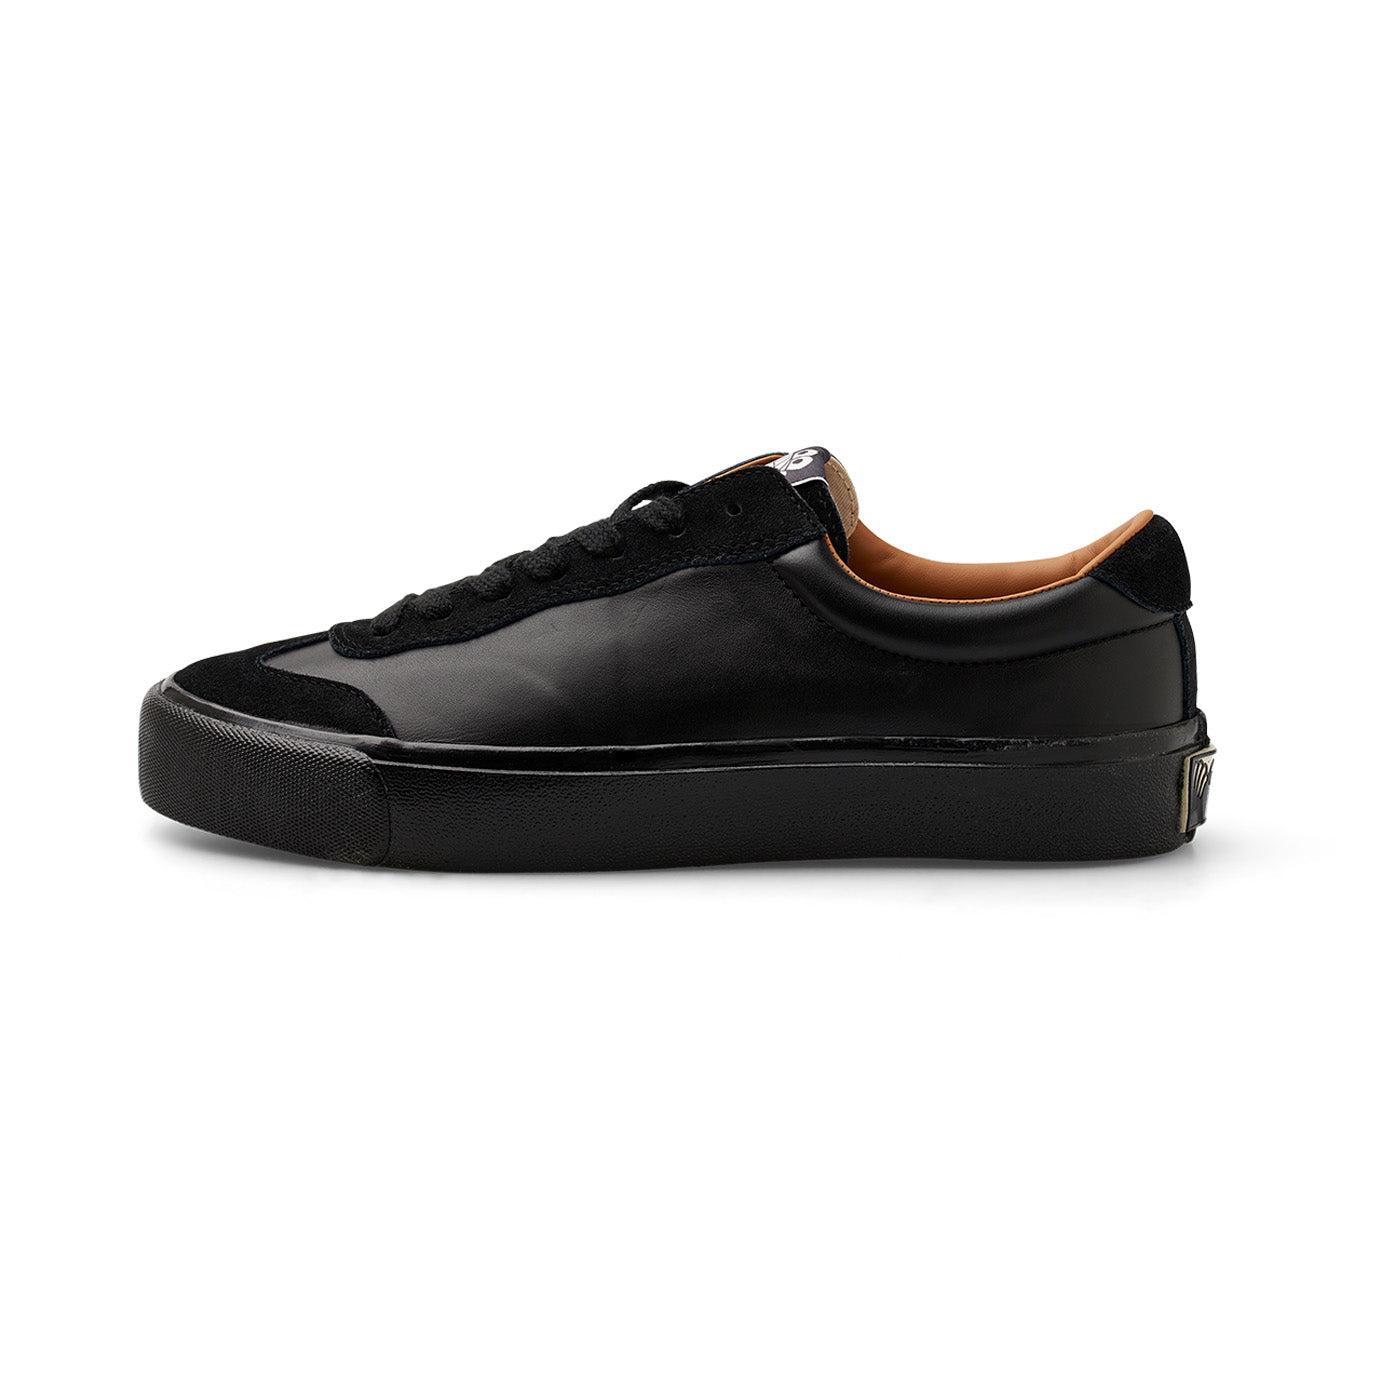 VM004 Milic Shoe Leather / Suede, Duo Black / Black